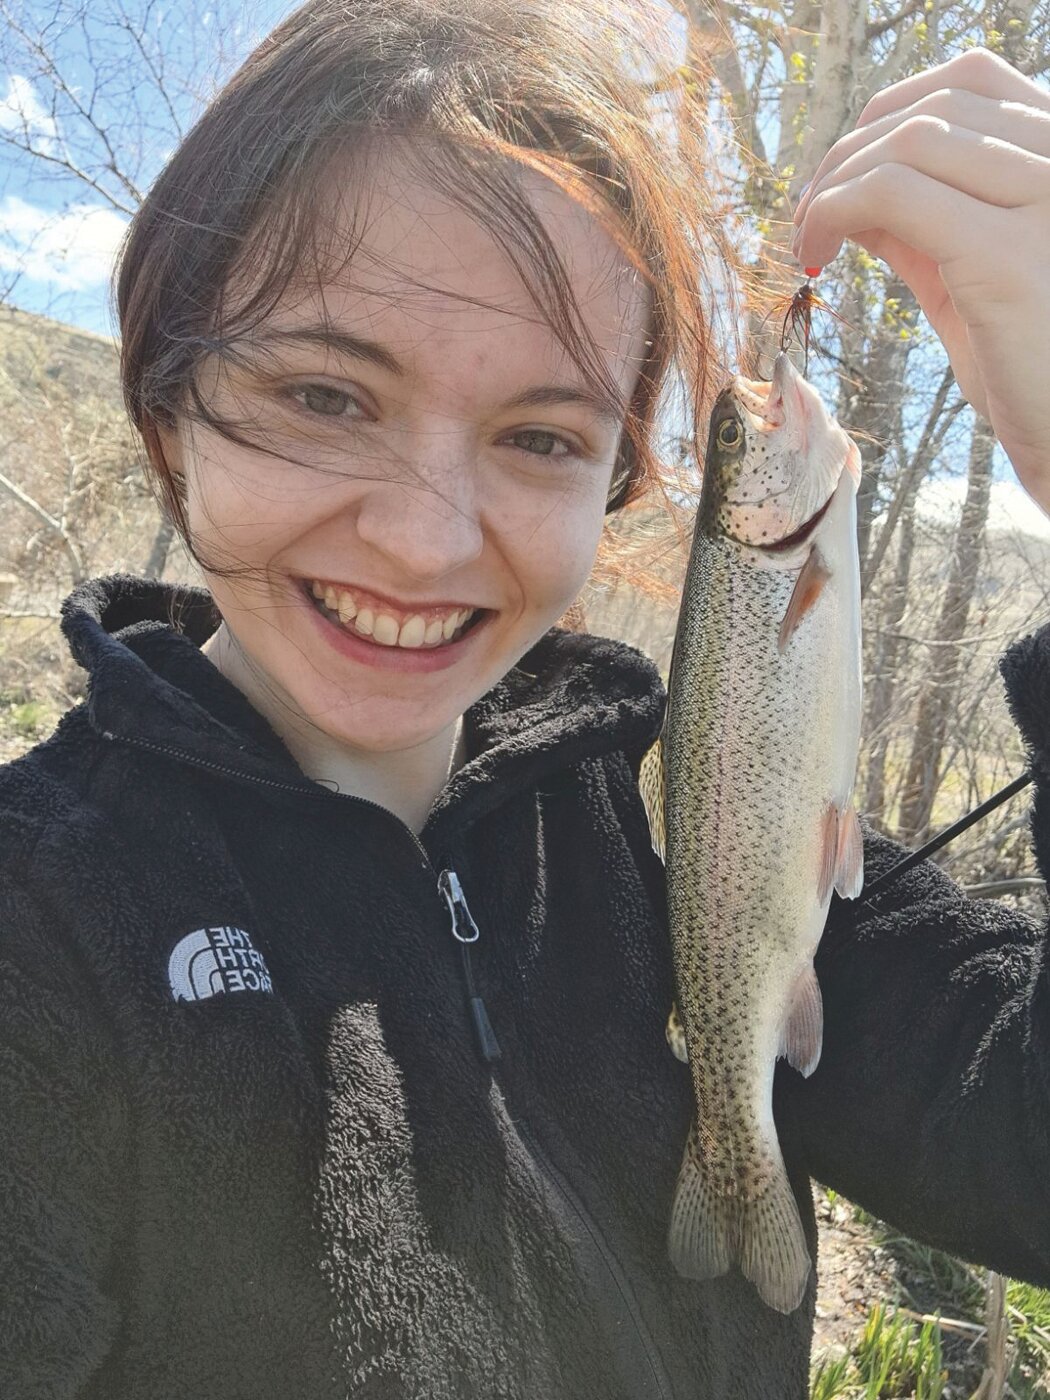 Faith Kruse with a lowland lakes opener trout caught in Kittitas County.
Courtesy Faith Kruse